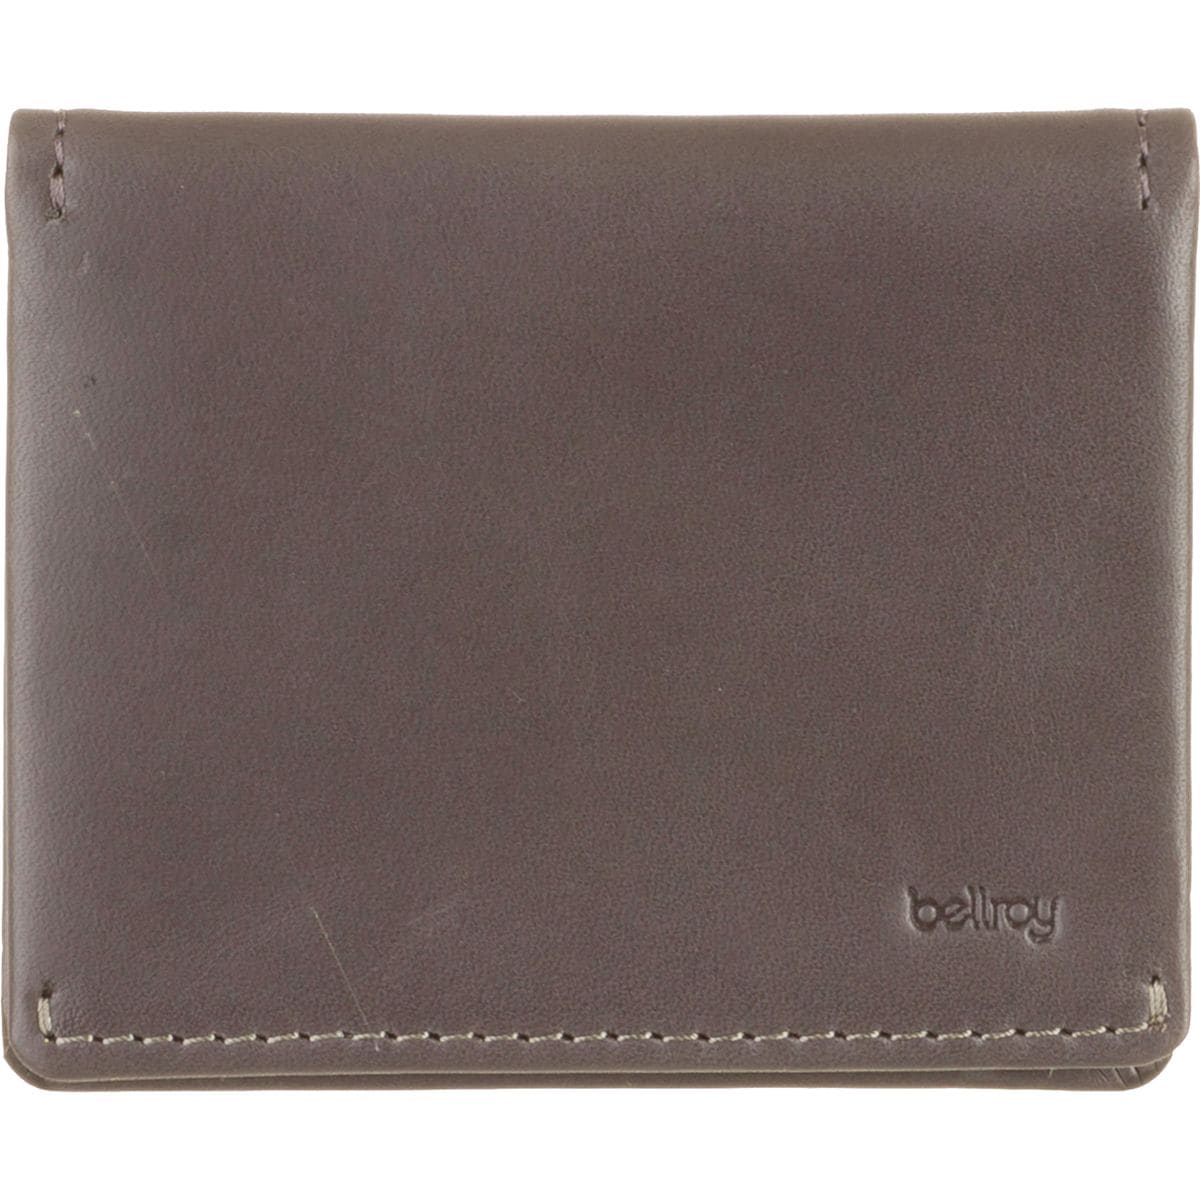 Slim Sleeve Bi-Fold Wallet - Men